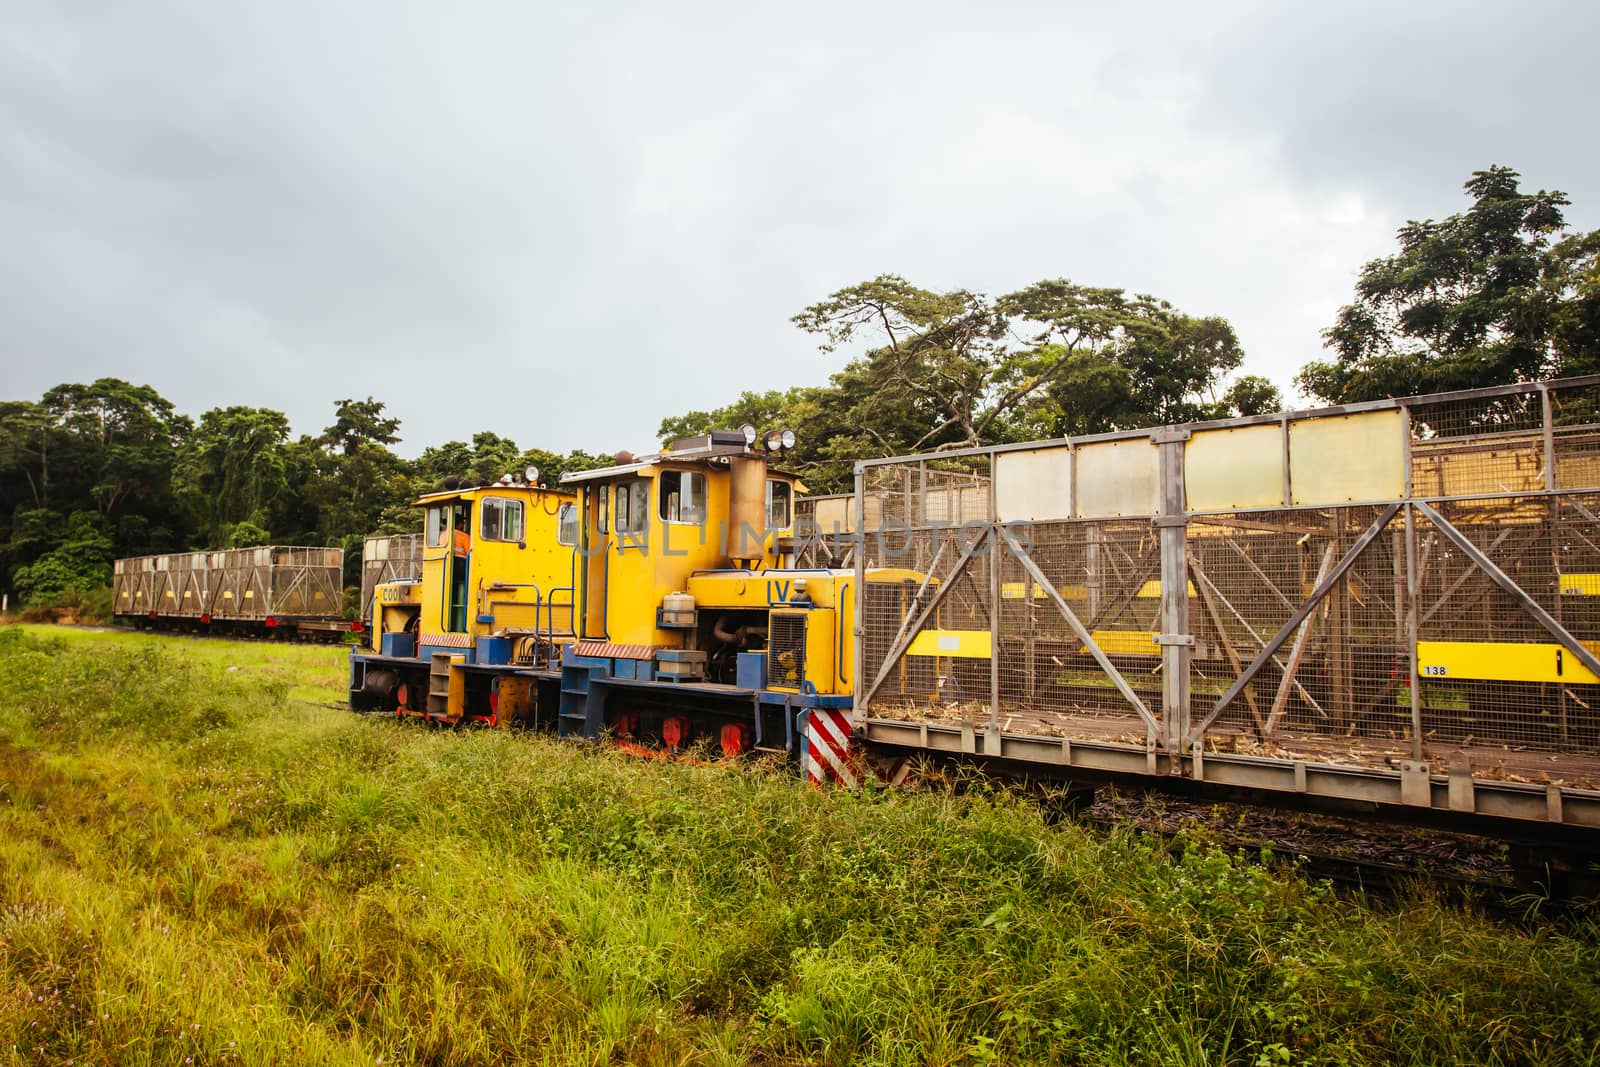 A sugar cane locomotive train near the Daintree in far north Queensland, Australia